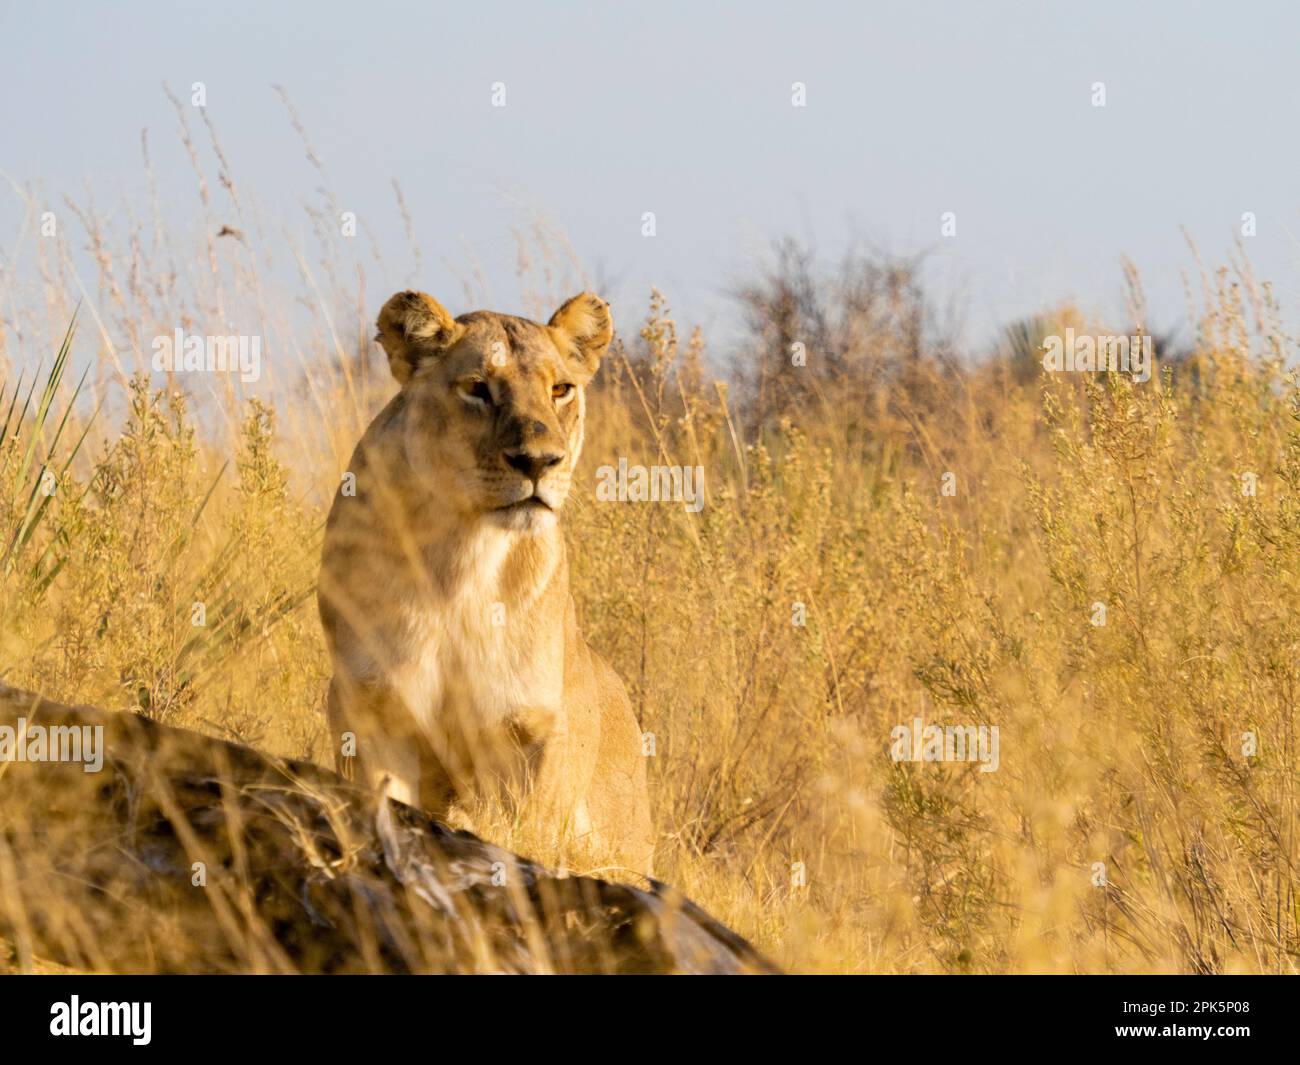 Lioness in grass, Sandibe concession, Okavango Delta, Botswana Stock Photo